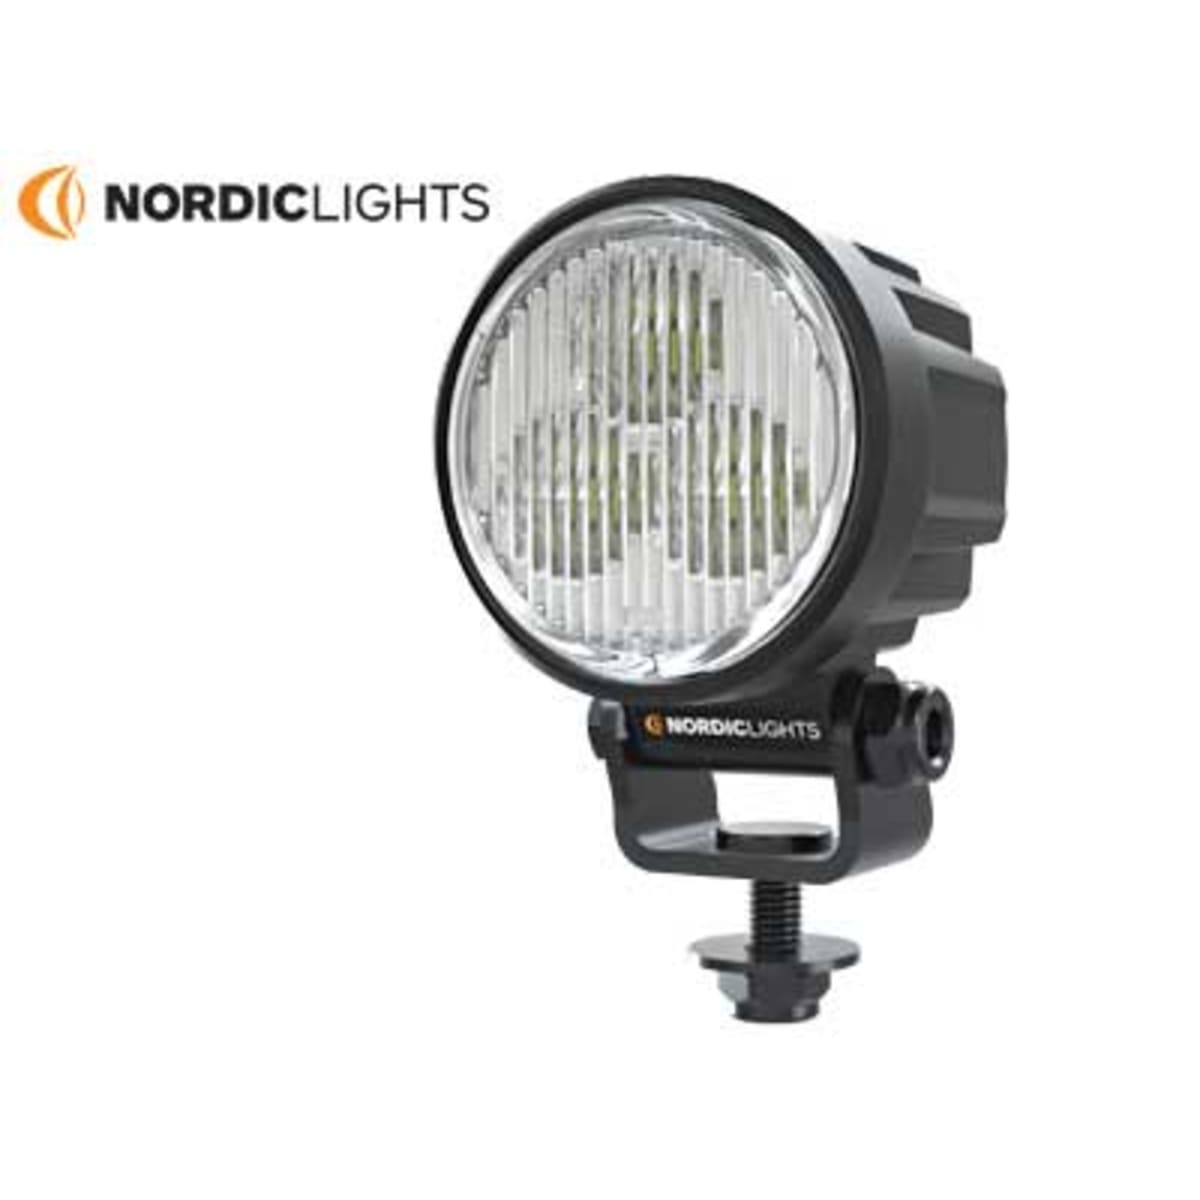 Nordic Lights Canis Pro 330 9-32V 28W Flood LED työvalo   verkkokauppa